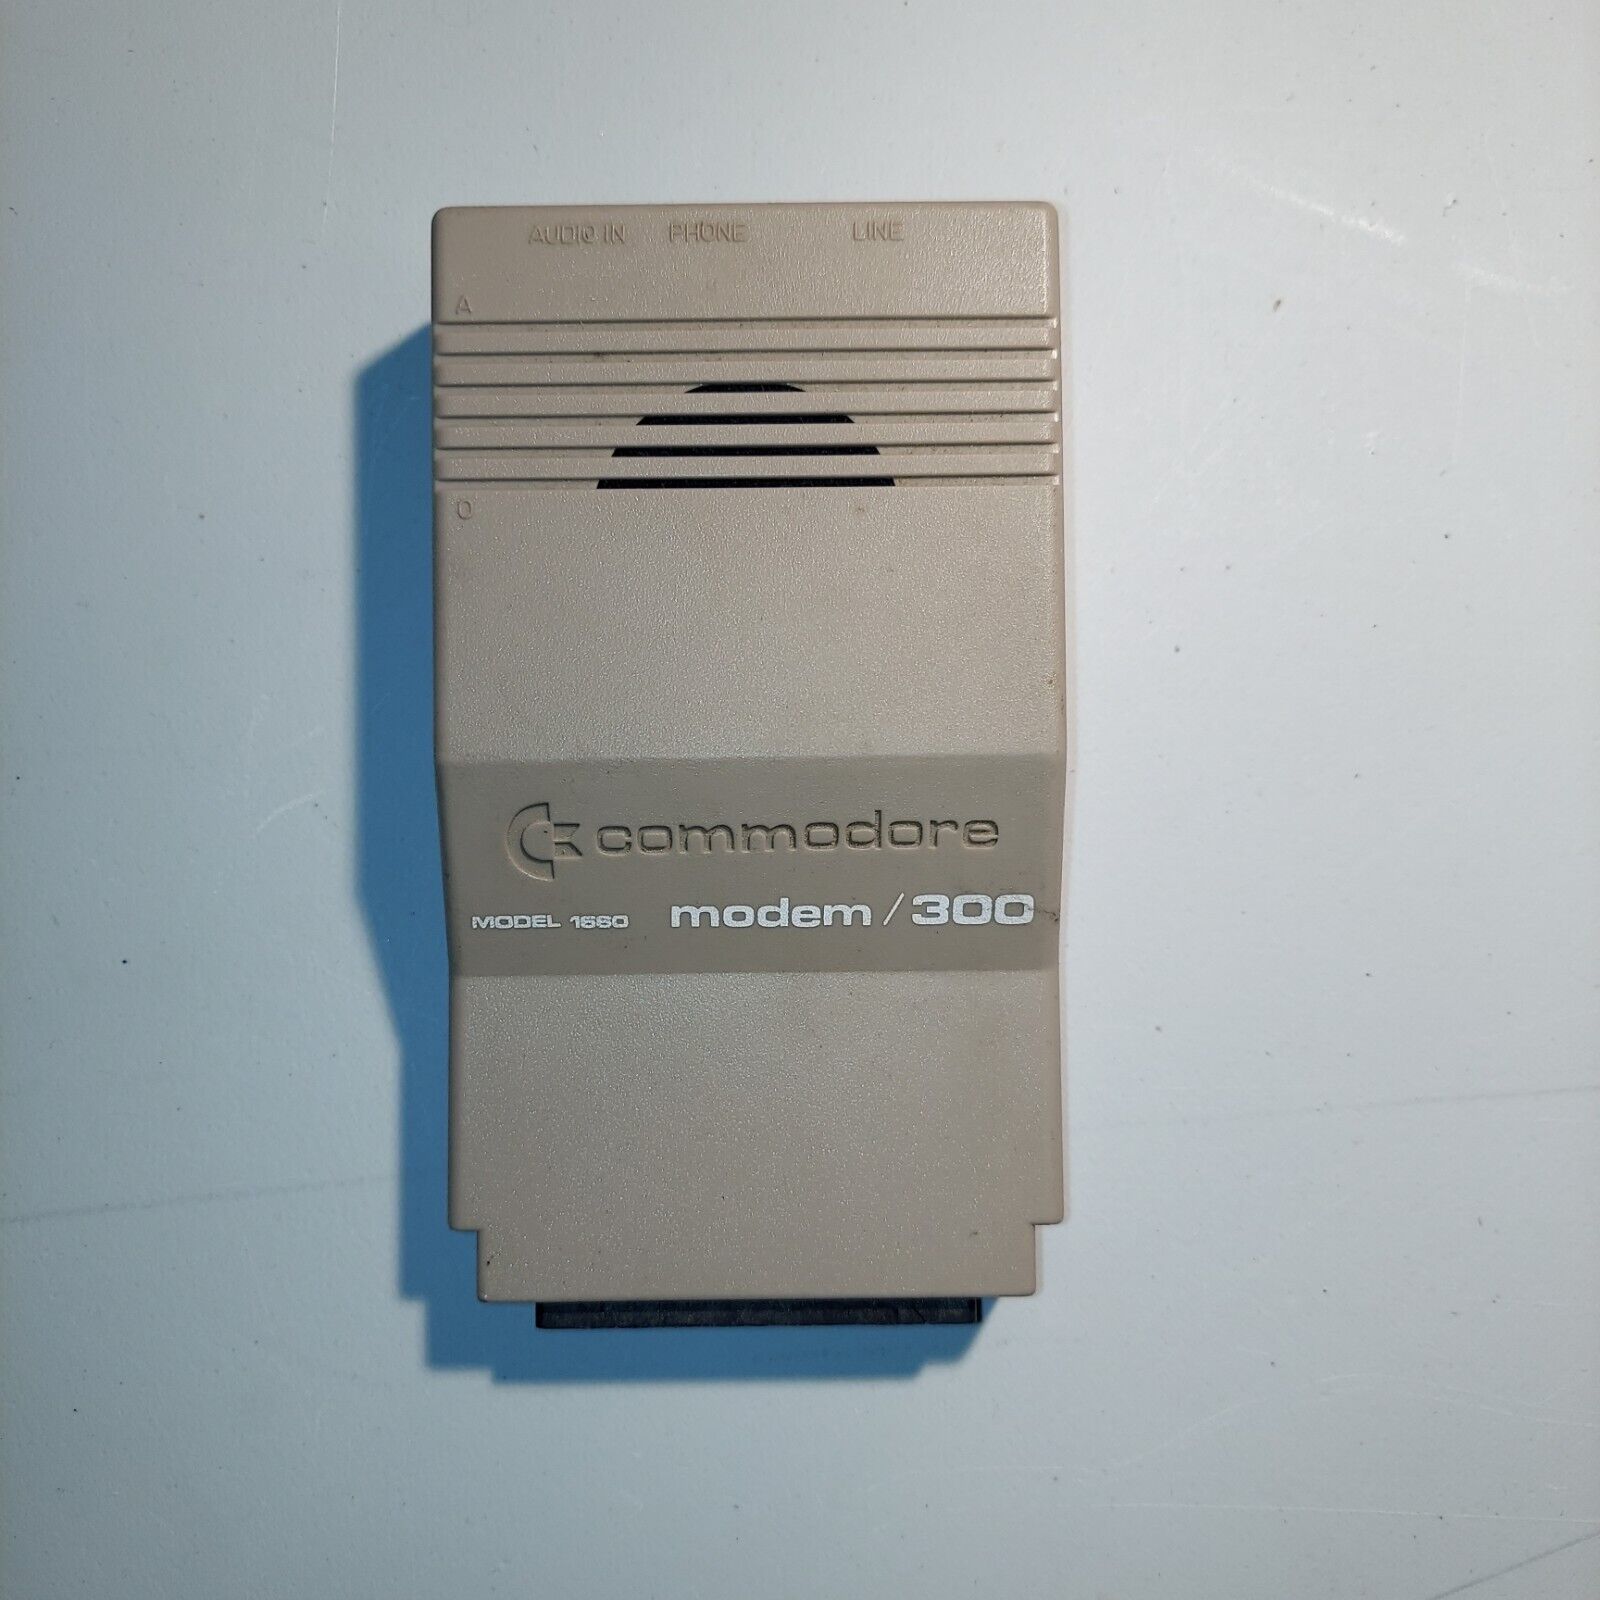 Vintage Commodore Model 1660 Modem / 300 - C64